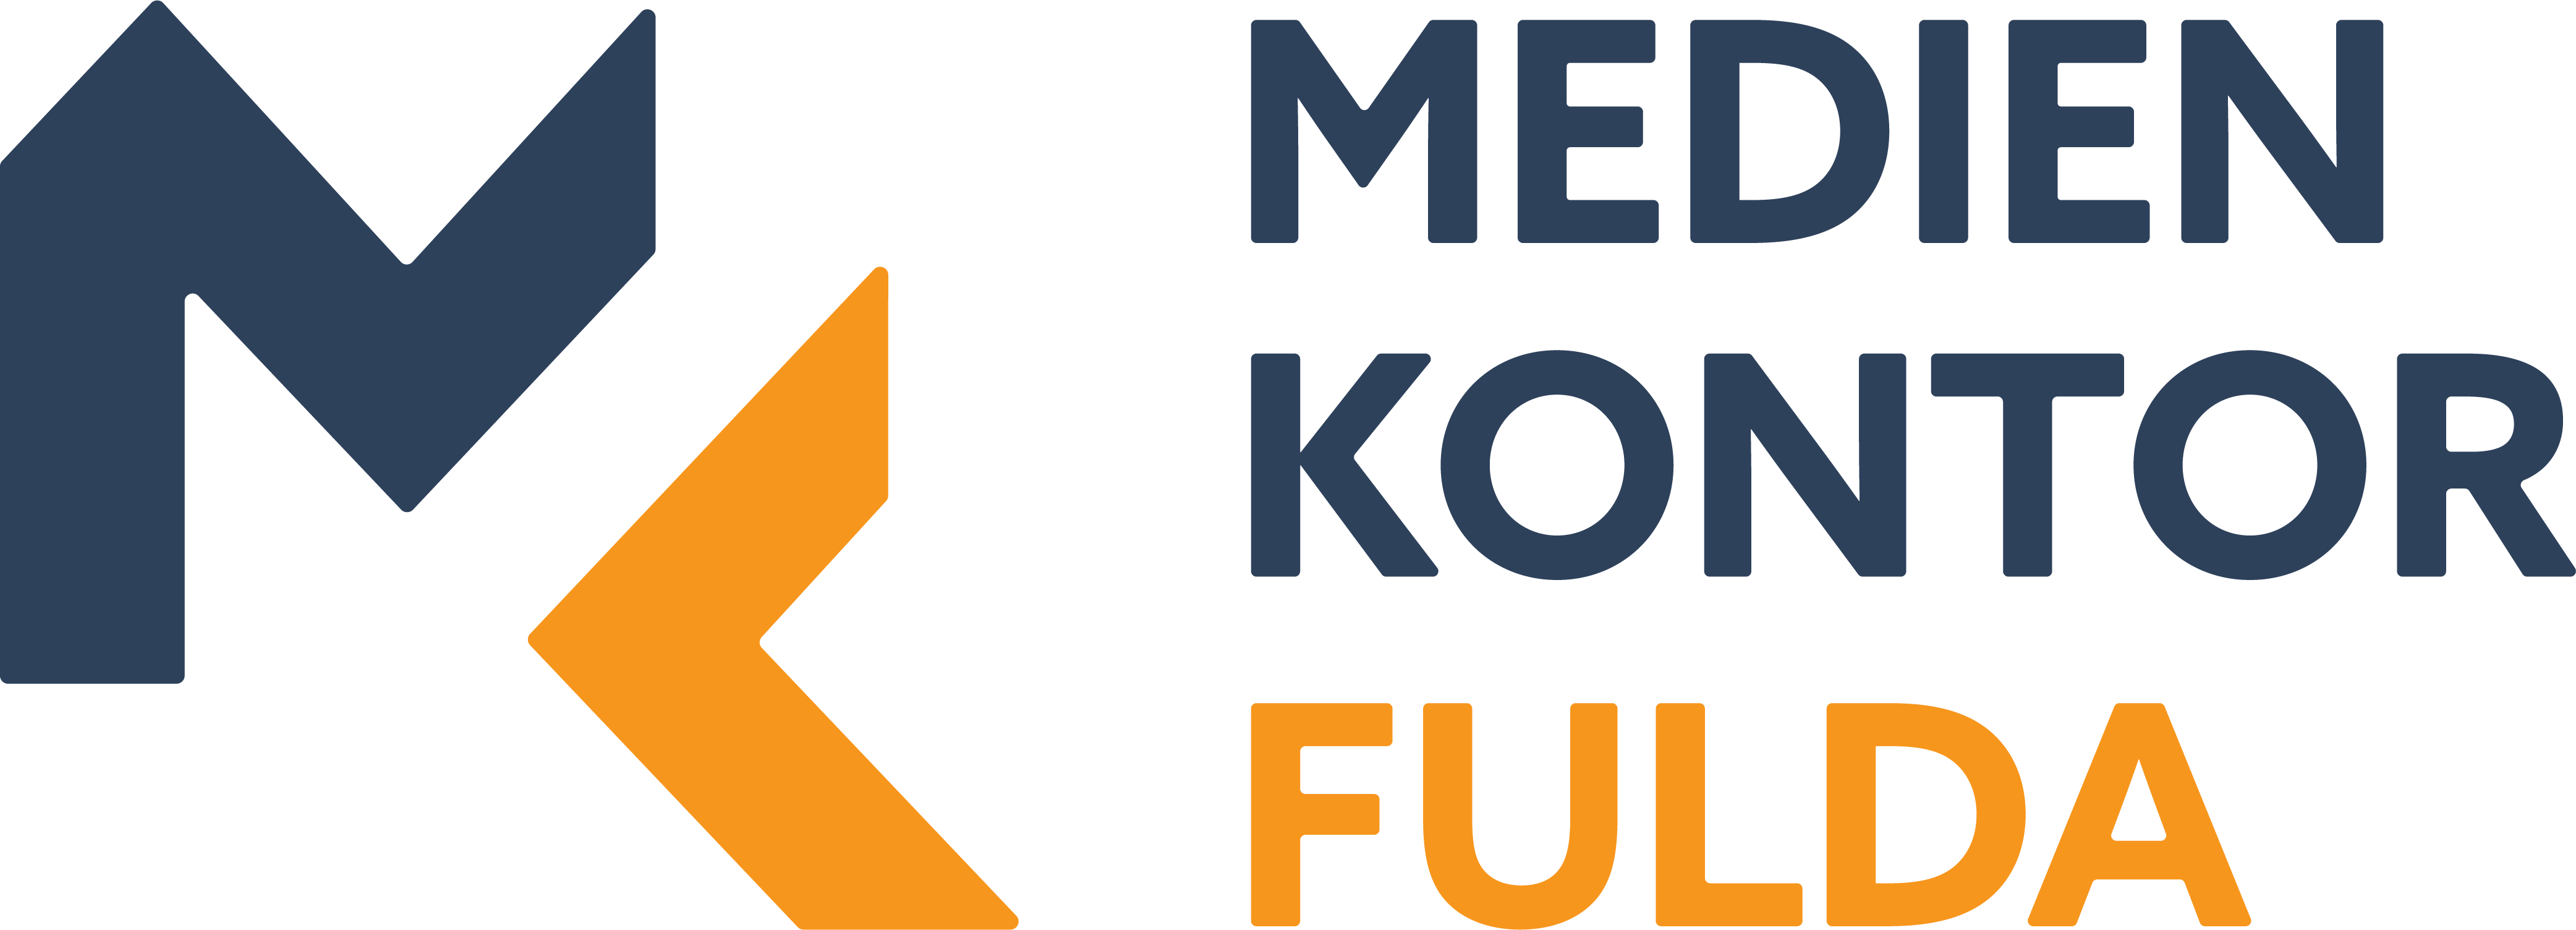 Medien Kontor Fulda Logo